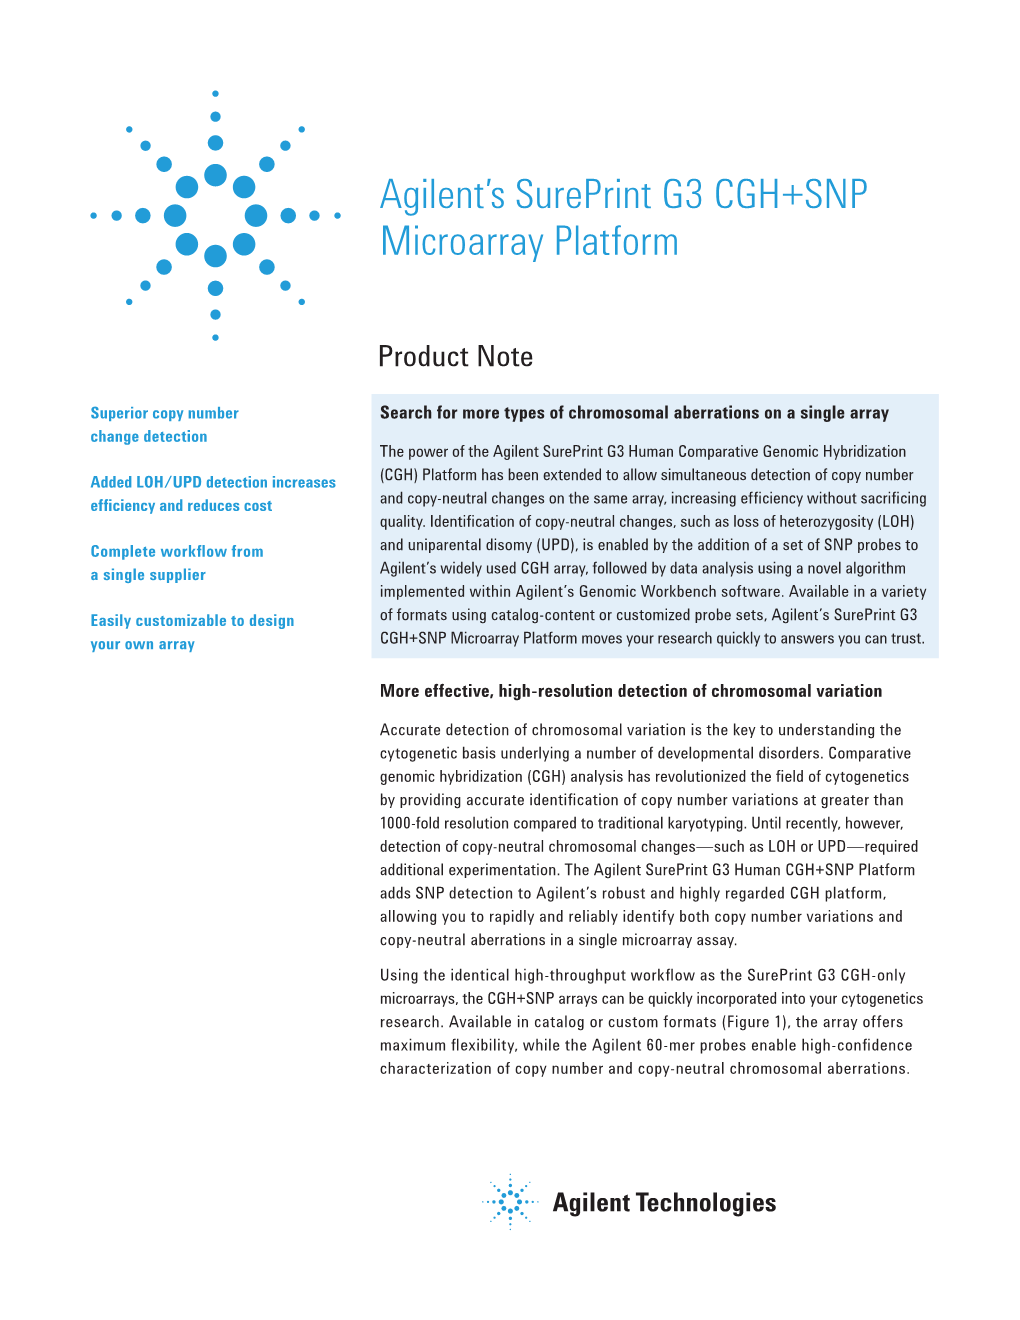 Agilent's Sureprint G3 CGH+SNP Microarray Platform